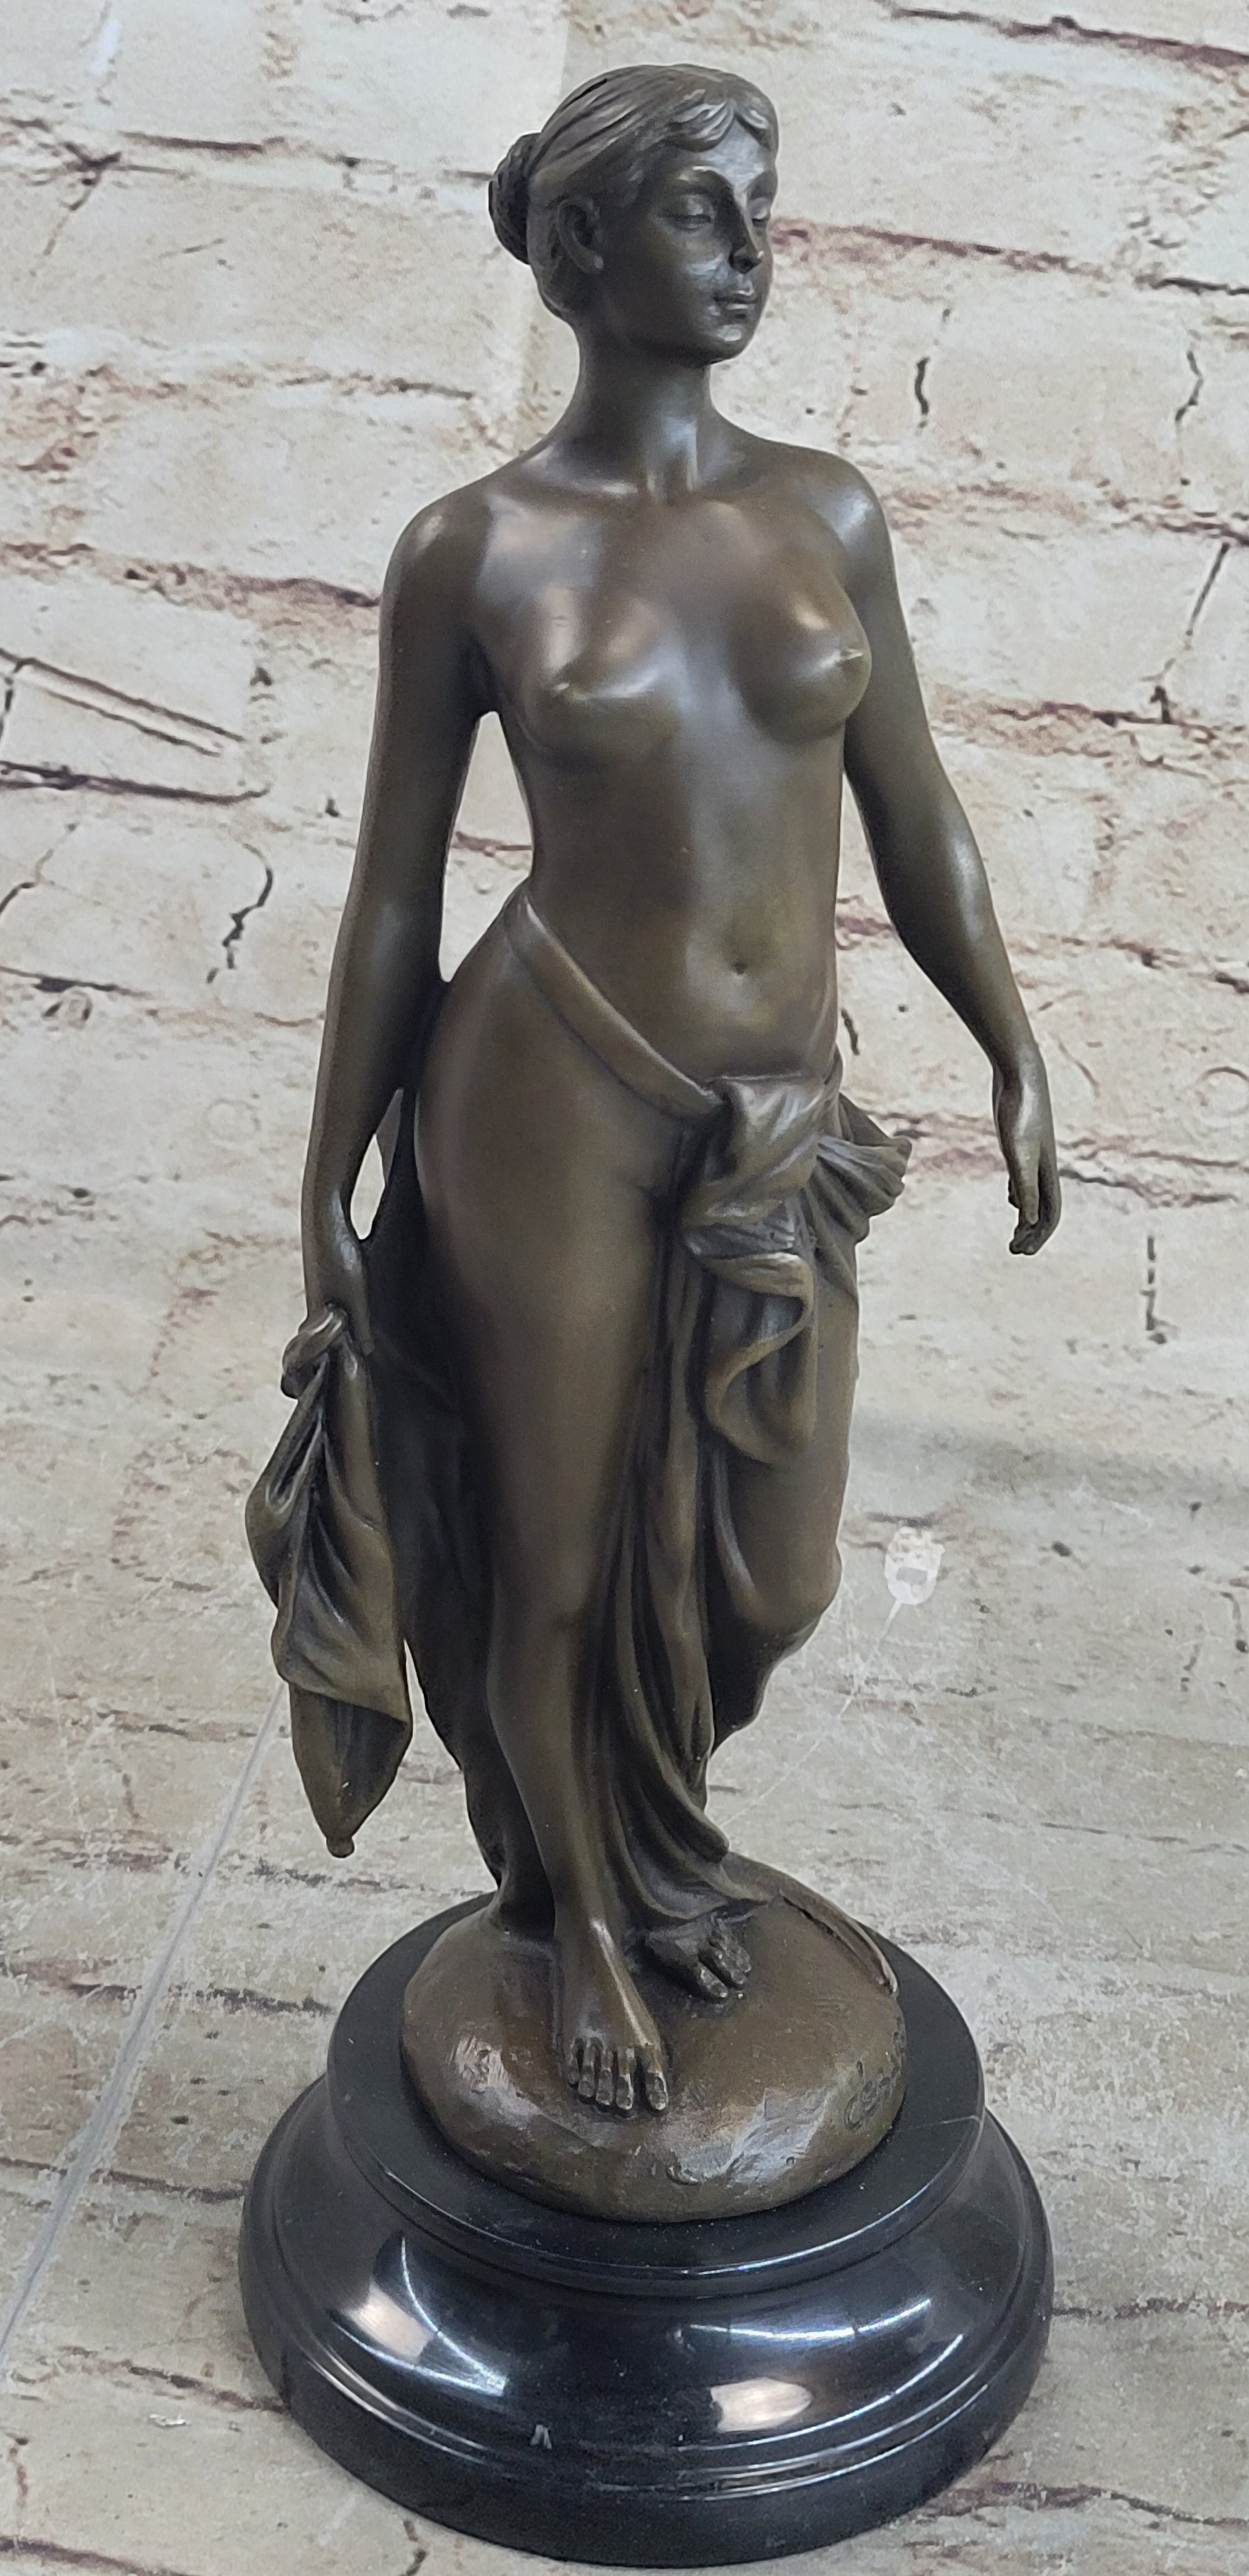  Hot Cast Nude Female Holding Whip Statue Figurine Bronze  Sculpture FigureÊå